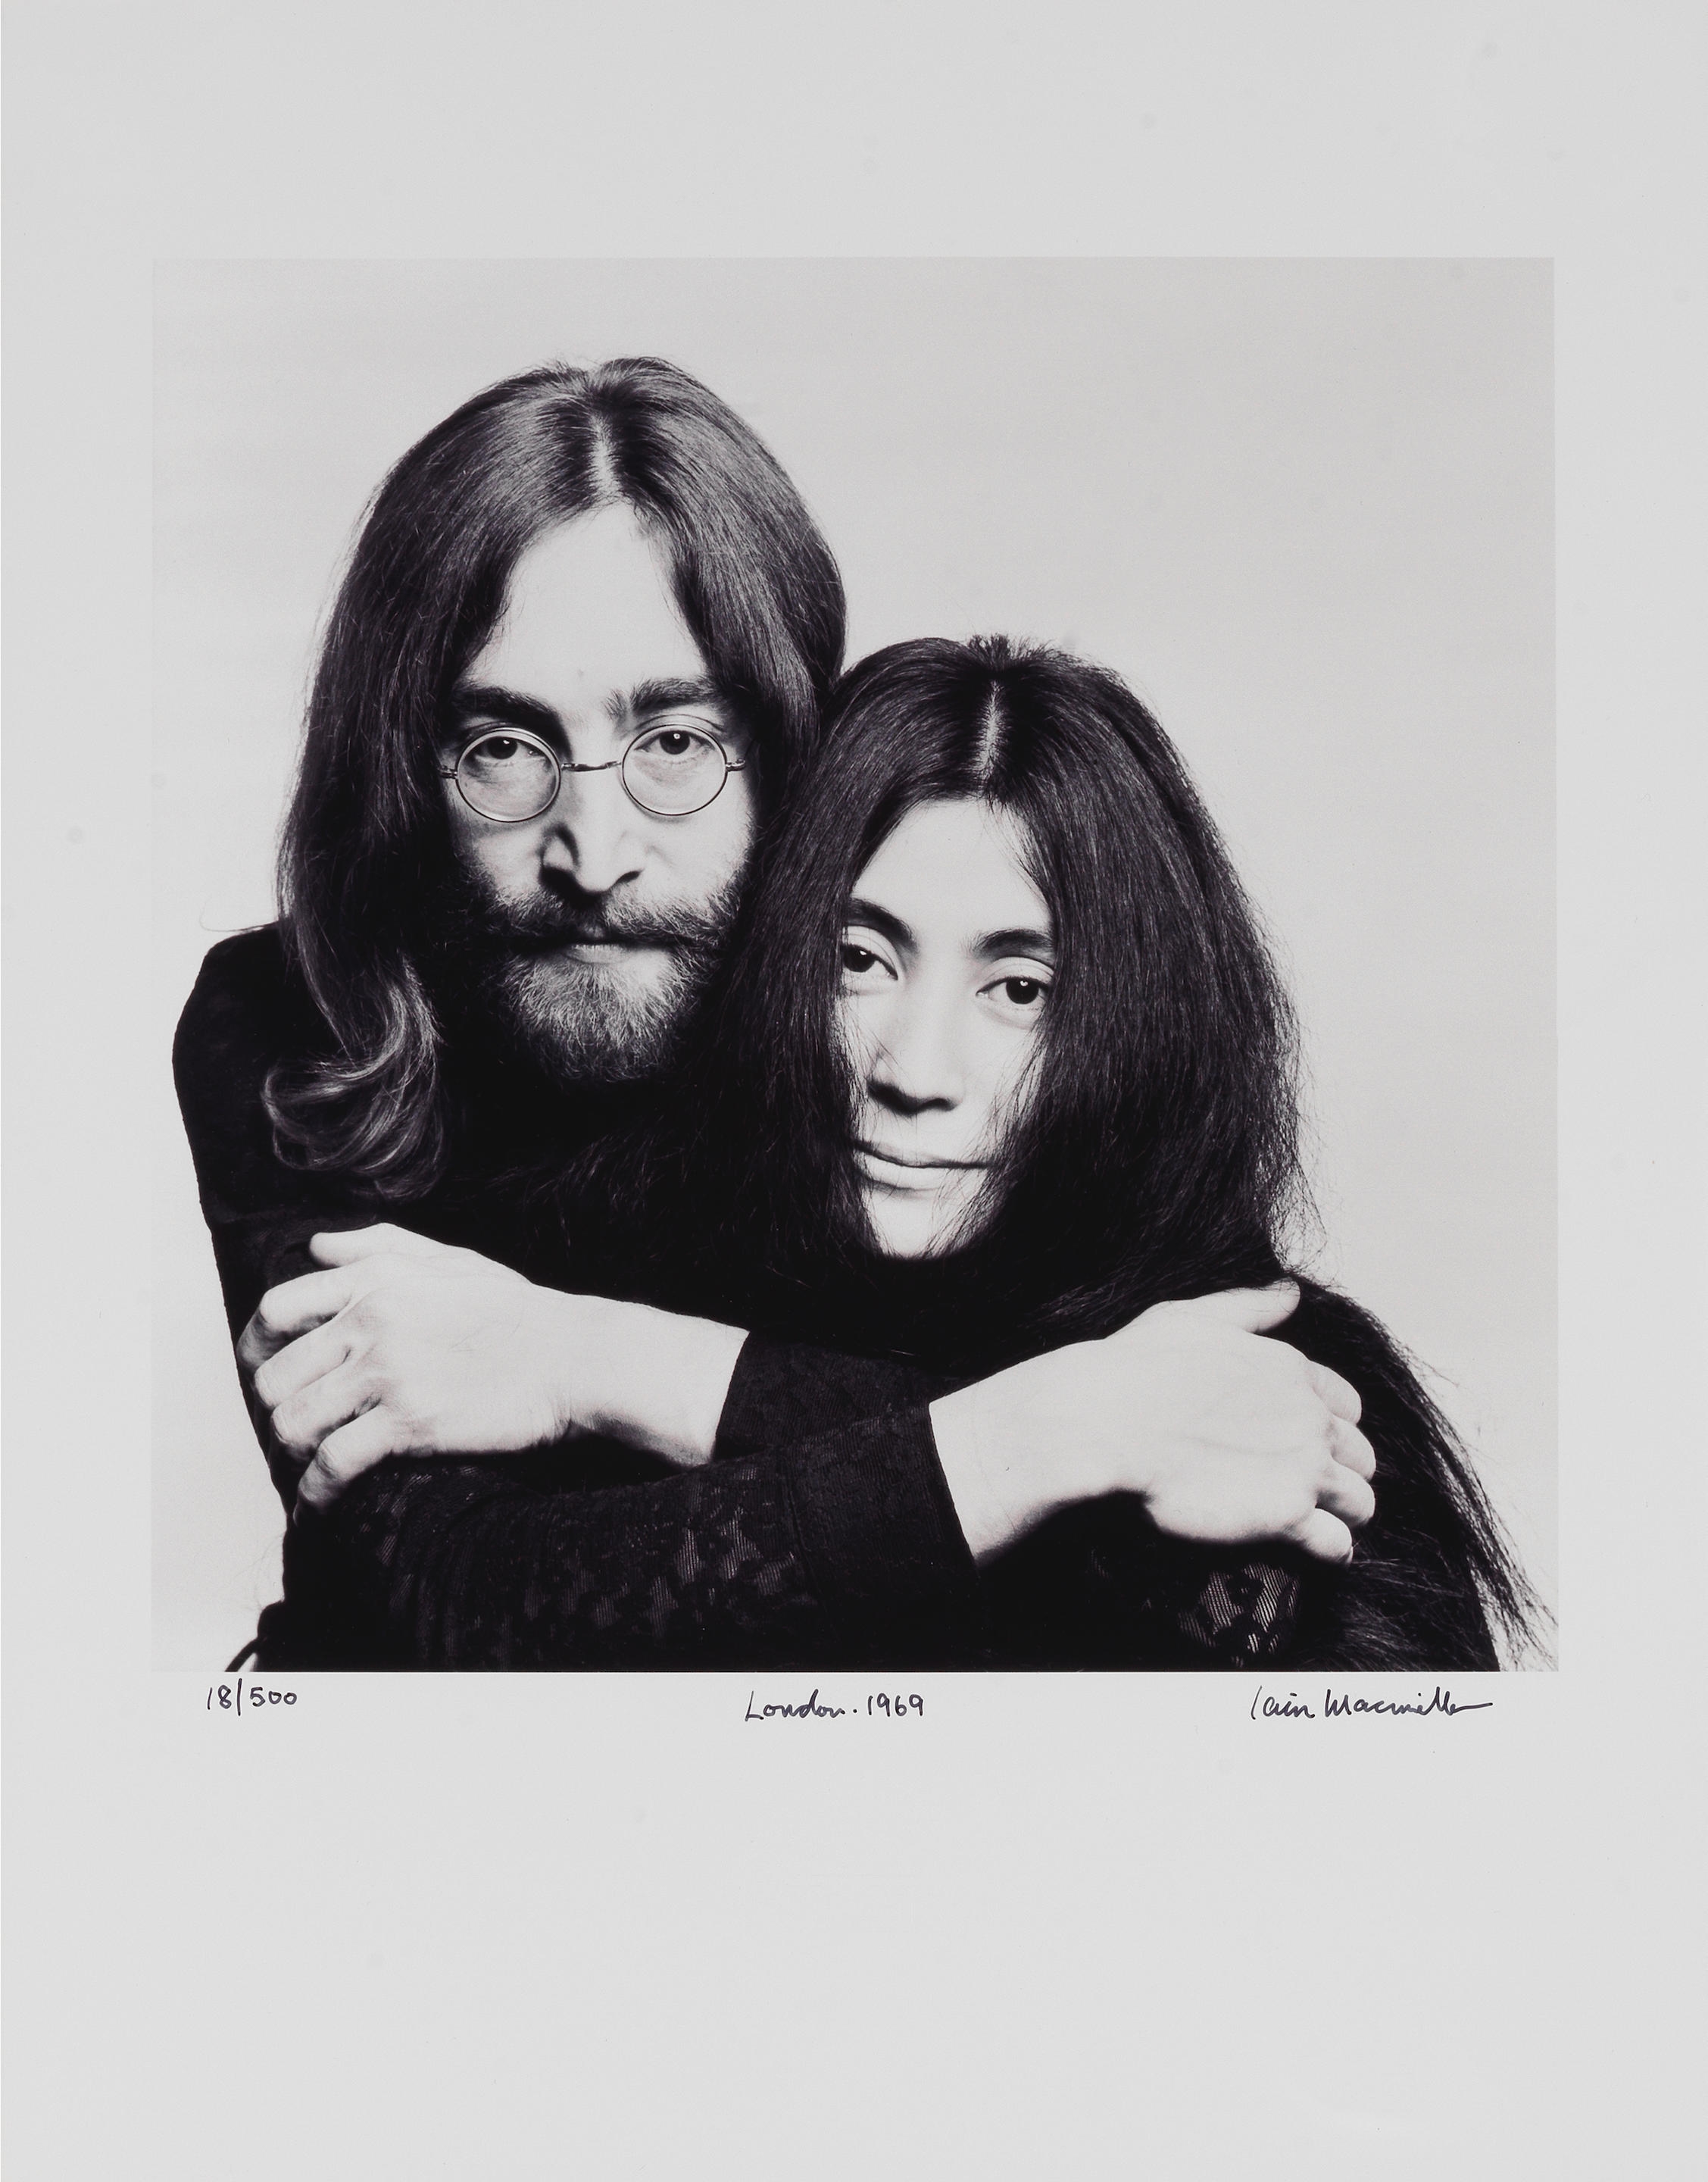 John Lennon & Yoko Ono , 1969 - Iain MacMillan